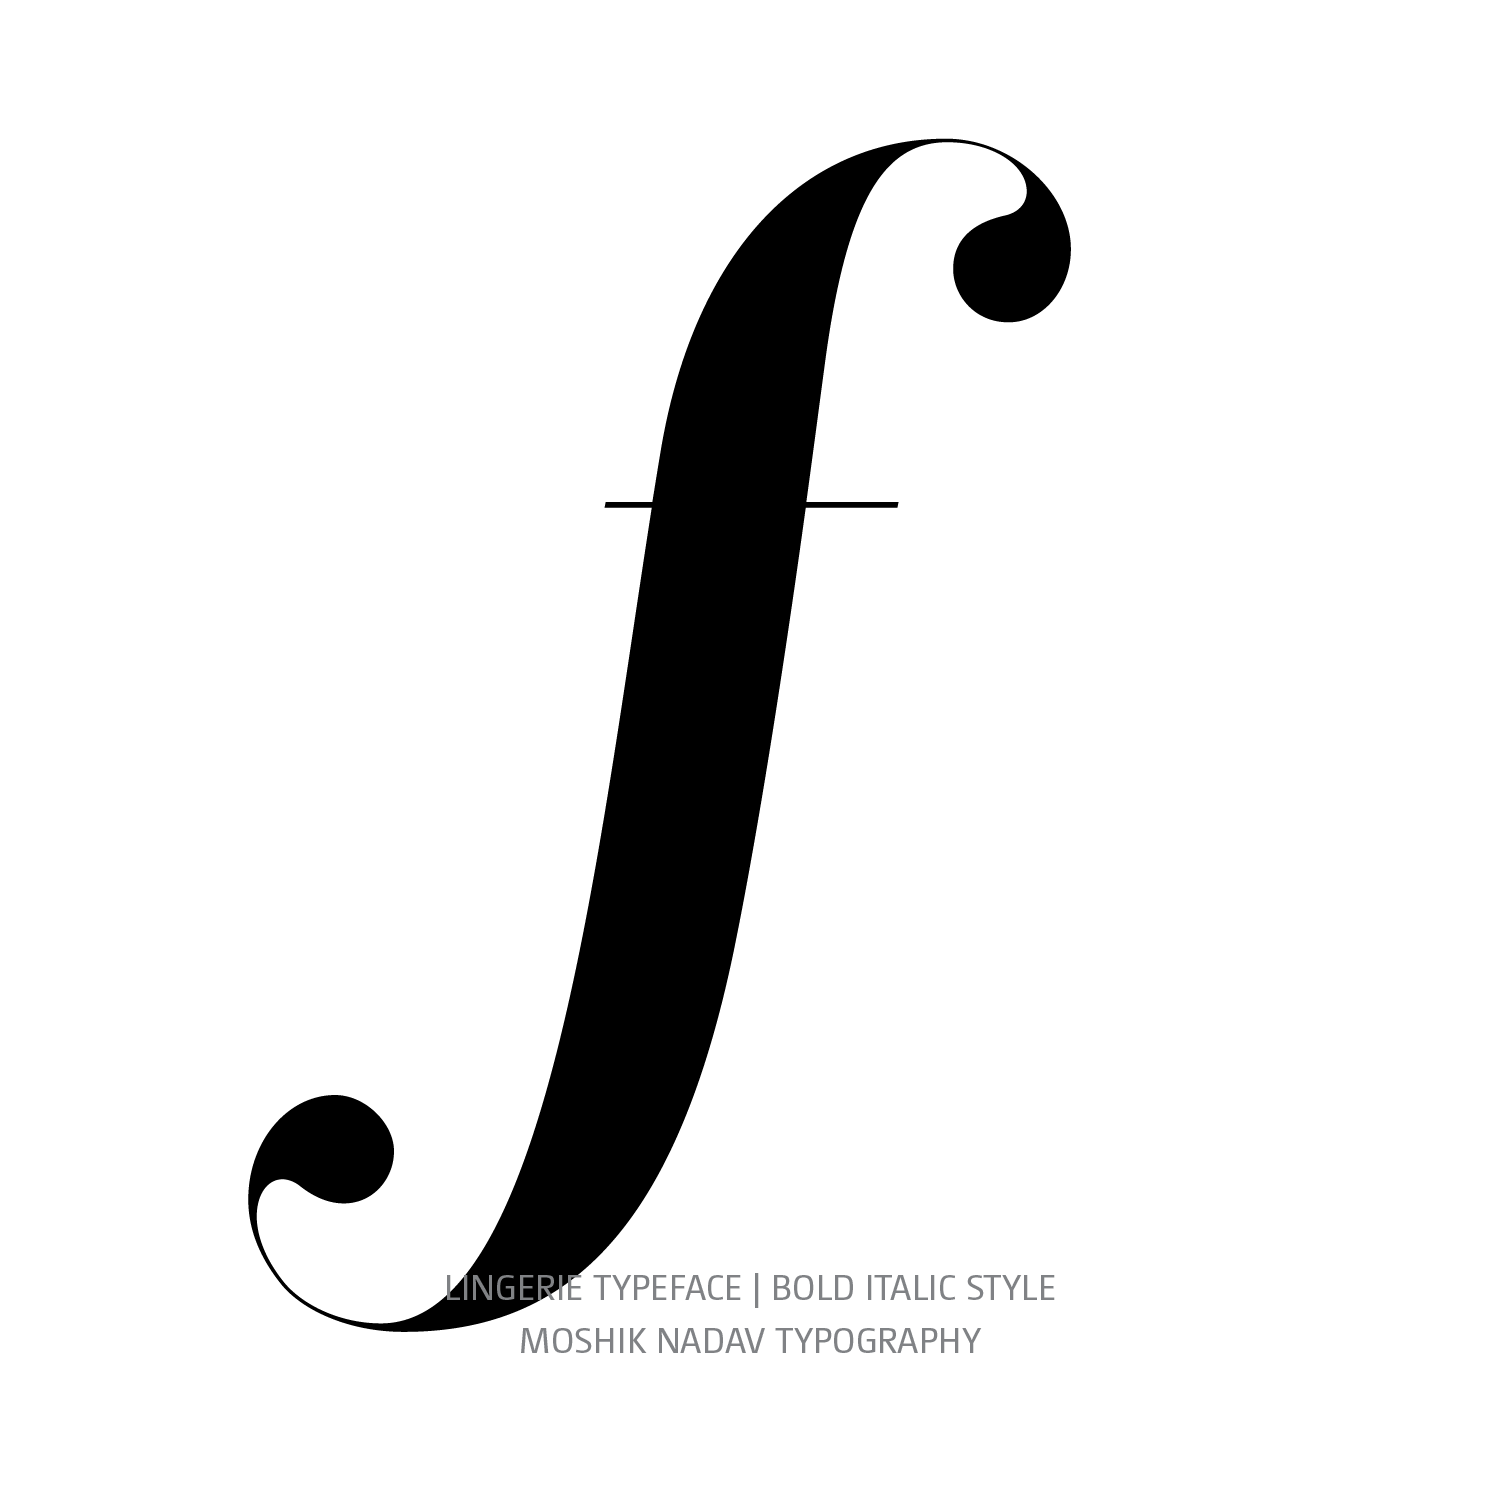 Lingerie Typeface Bold Italic f